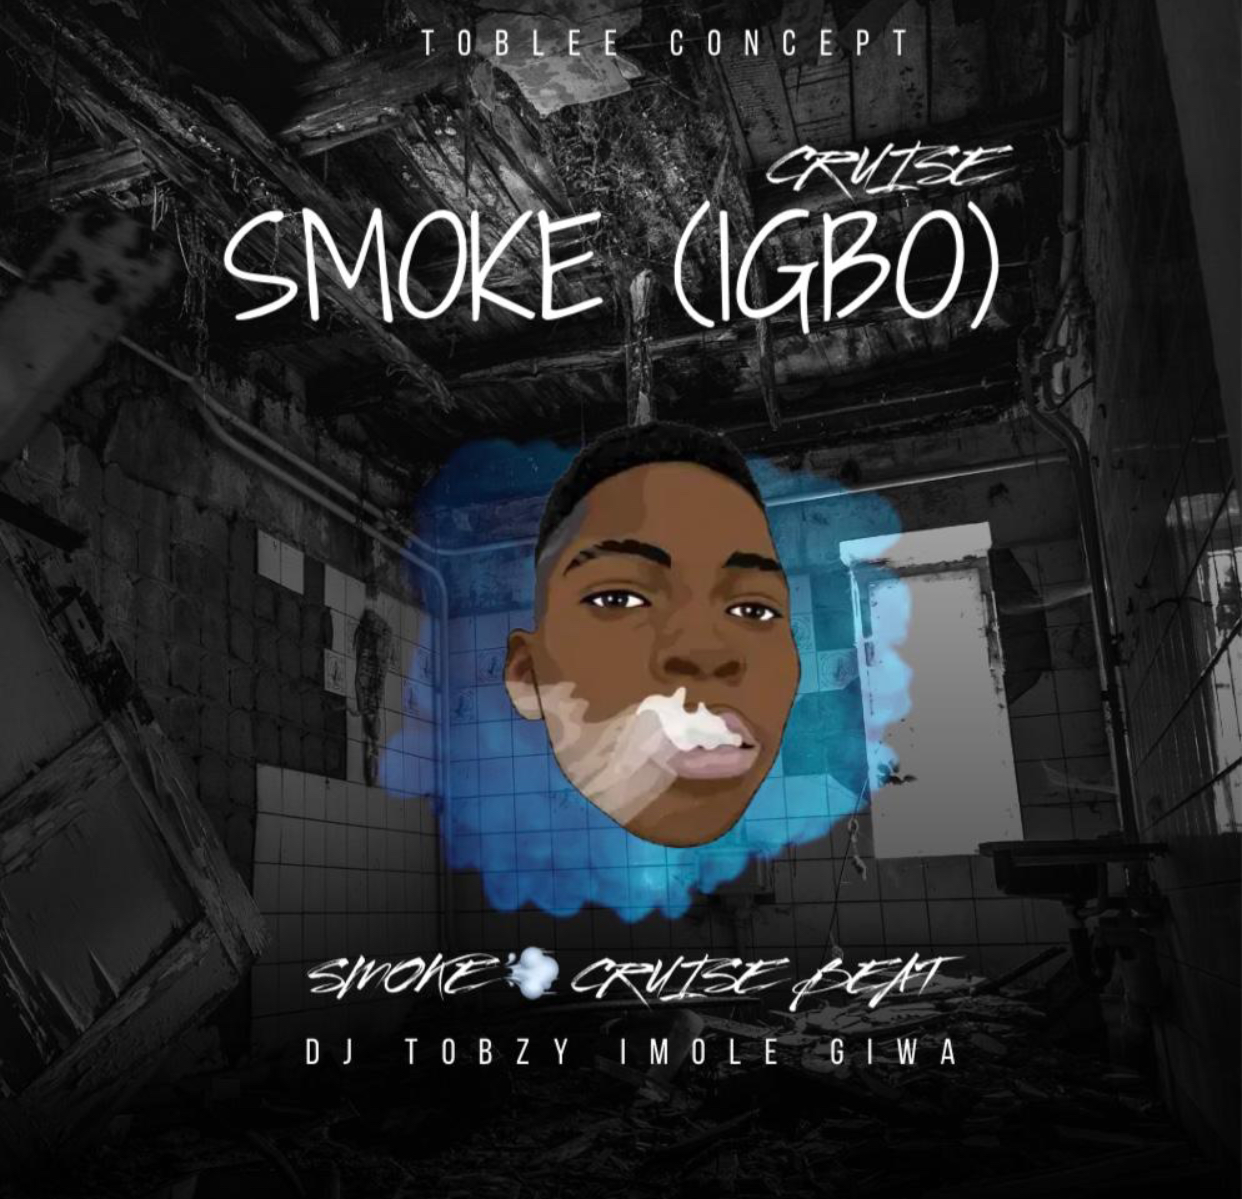 DJ Tobzy - Smoke (Igbo) Cruise Refix